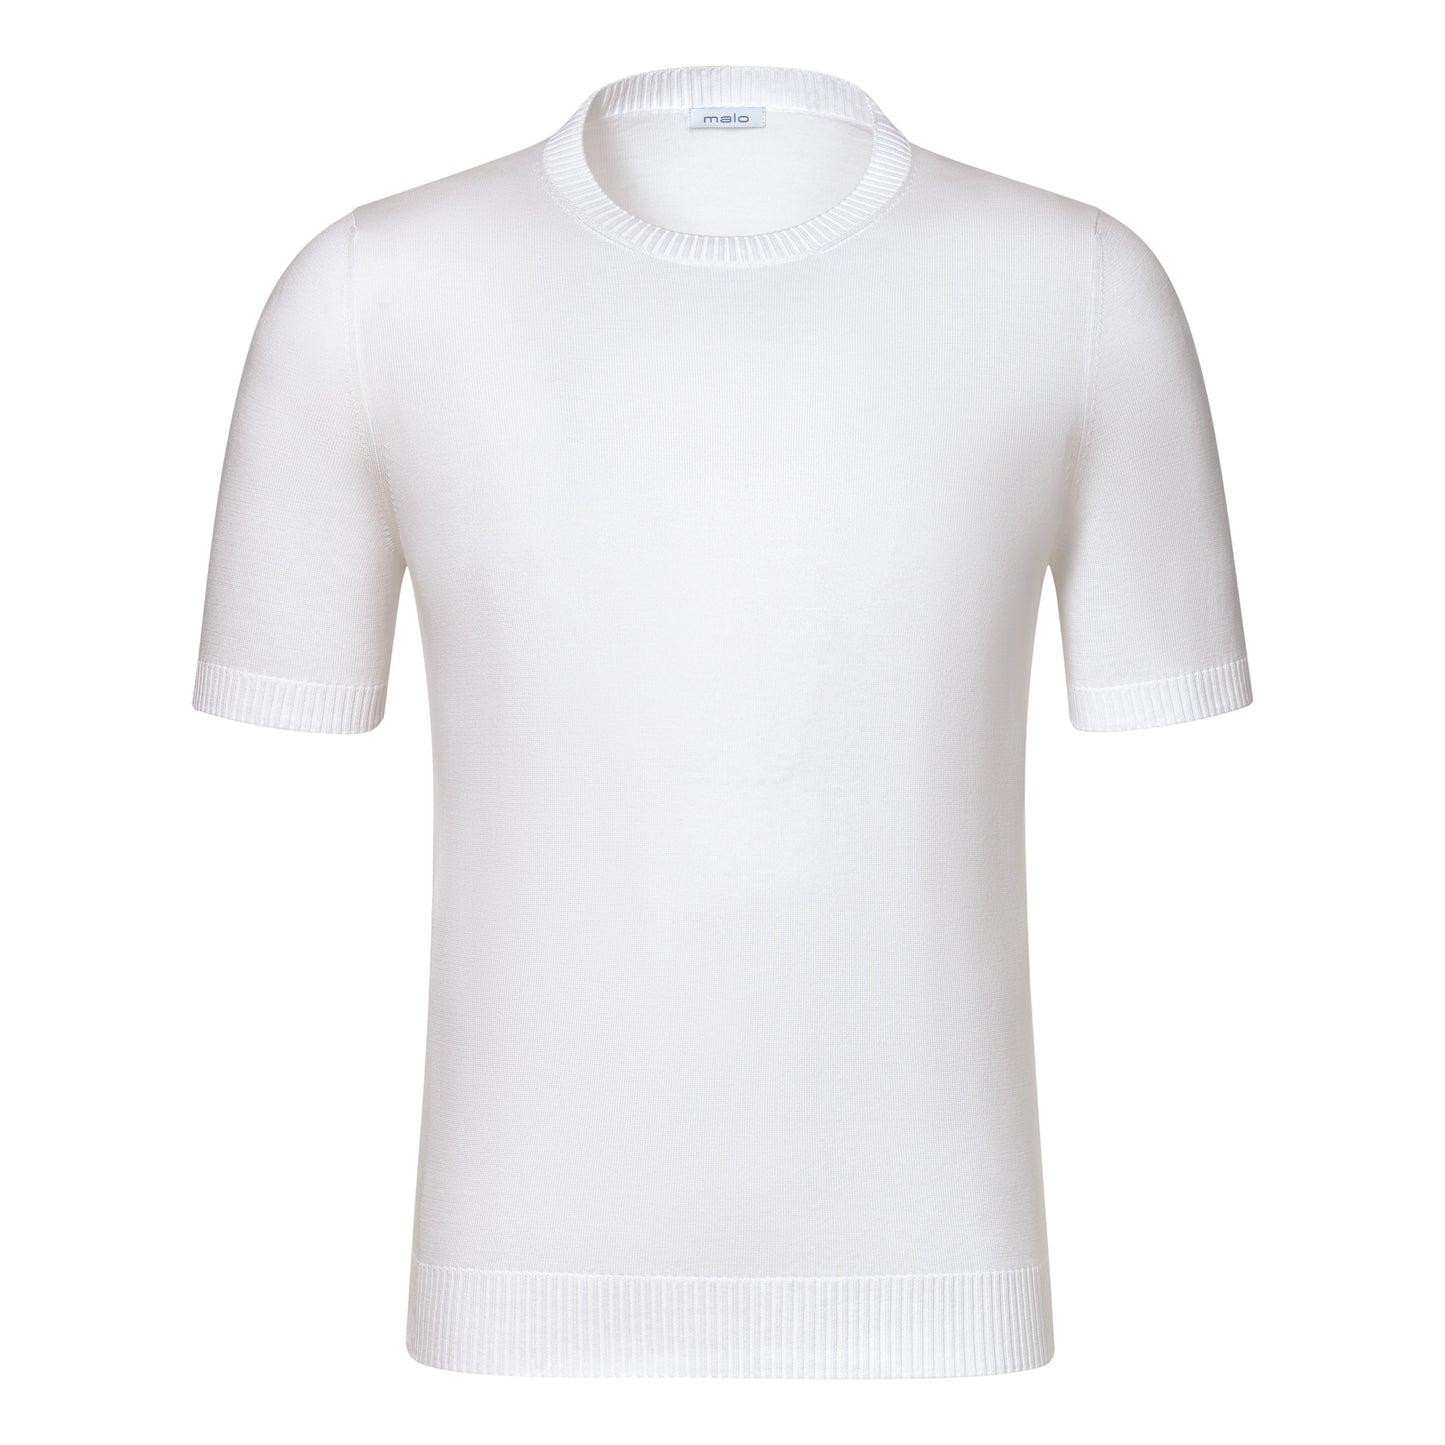 Cotton Crew-Neck T-Shirt in White